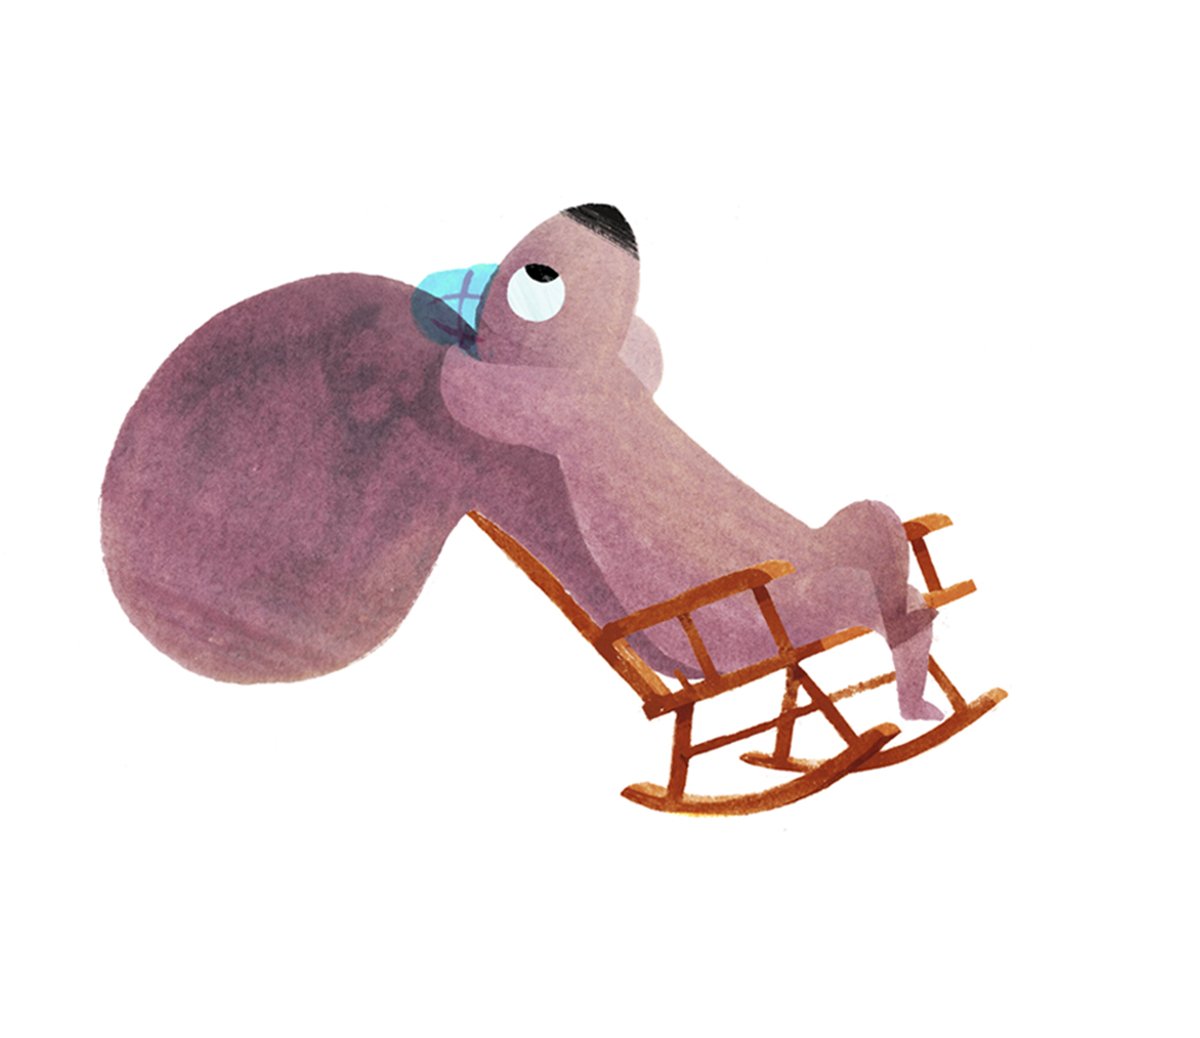 steve-small-squirrel-in-chair-illustration.jpg